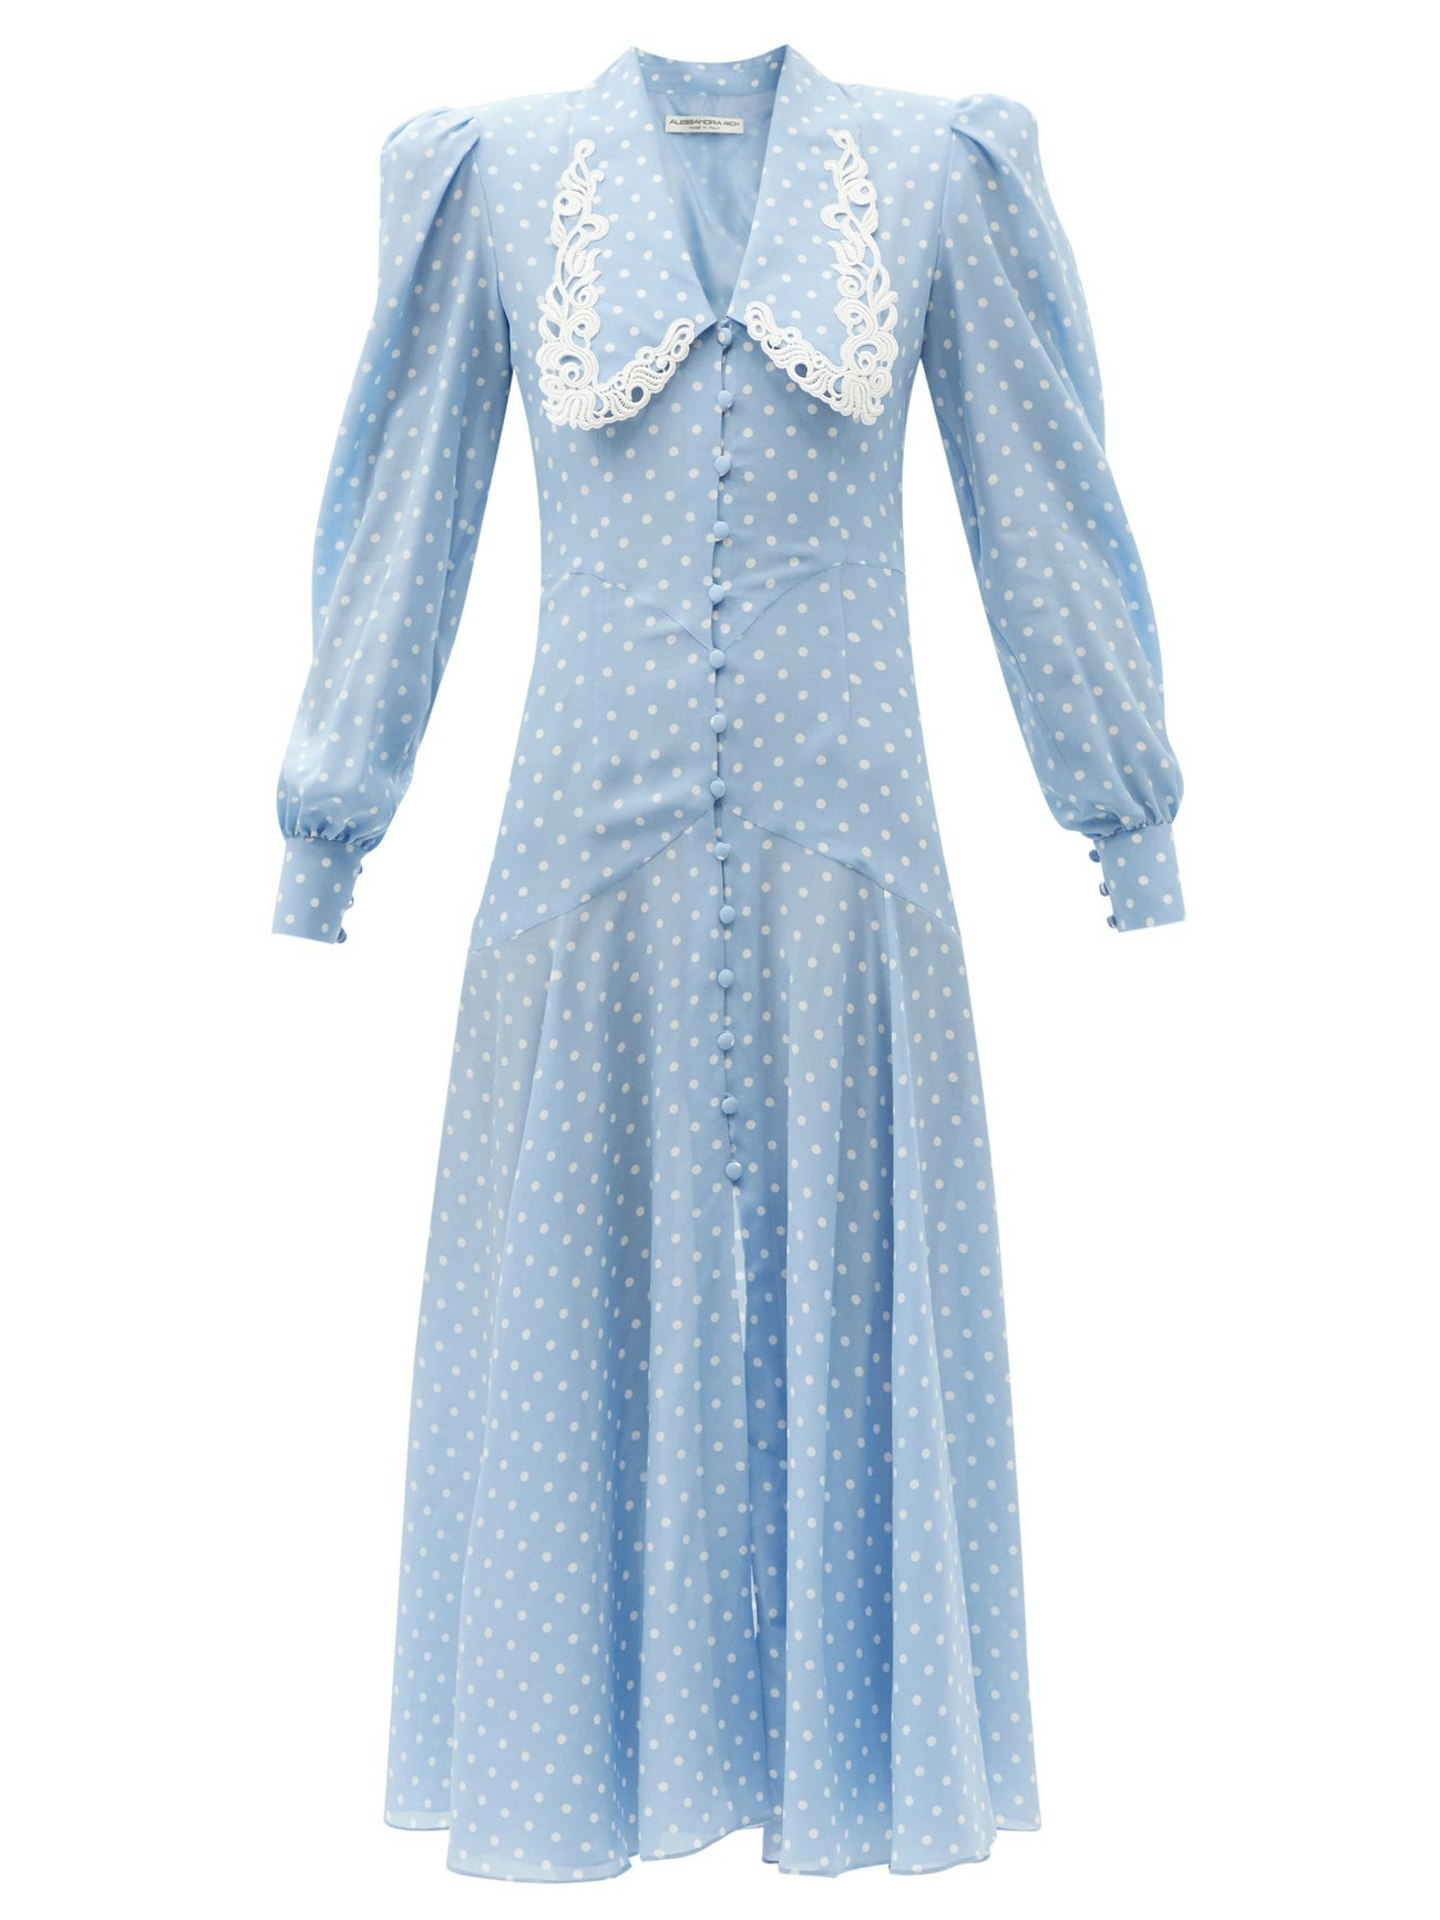 Alessandra Rich, Dropped-Waist Polka-Dot Silk Dress, £1,520